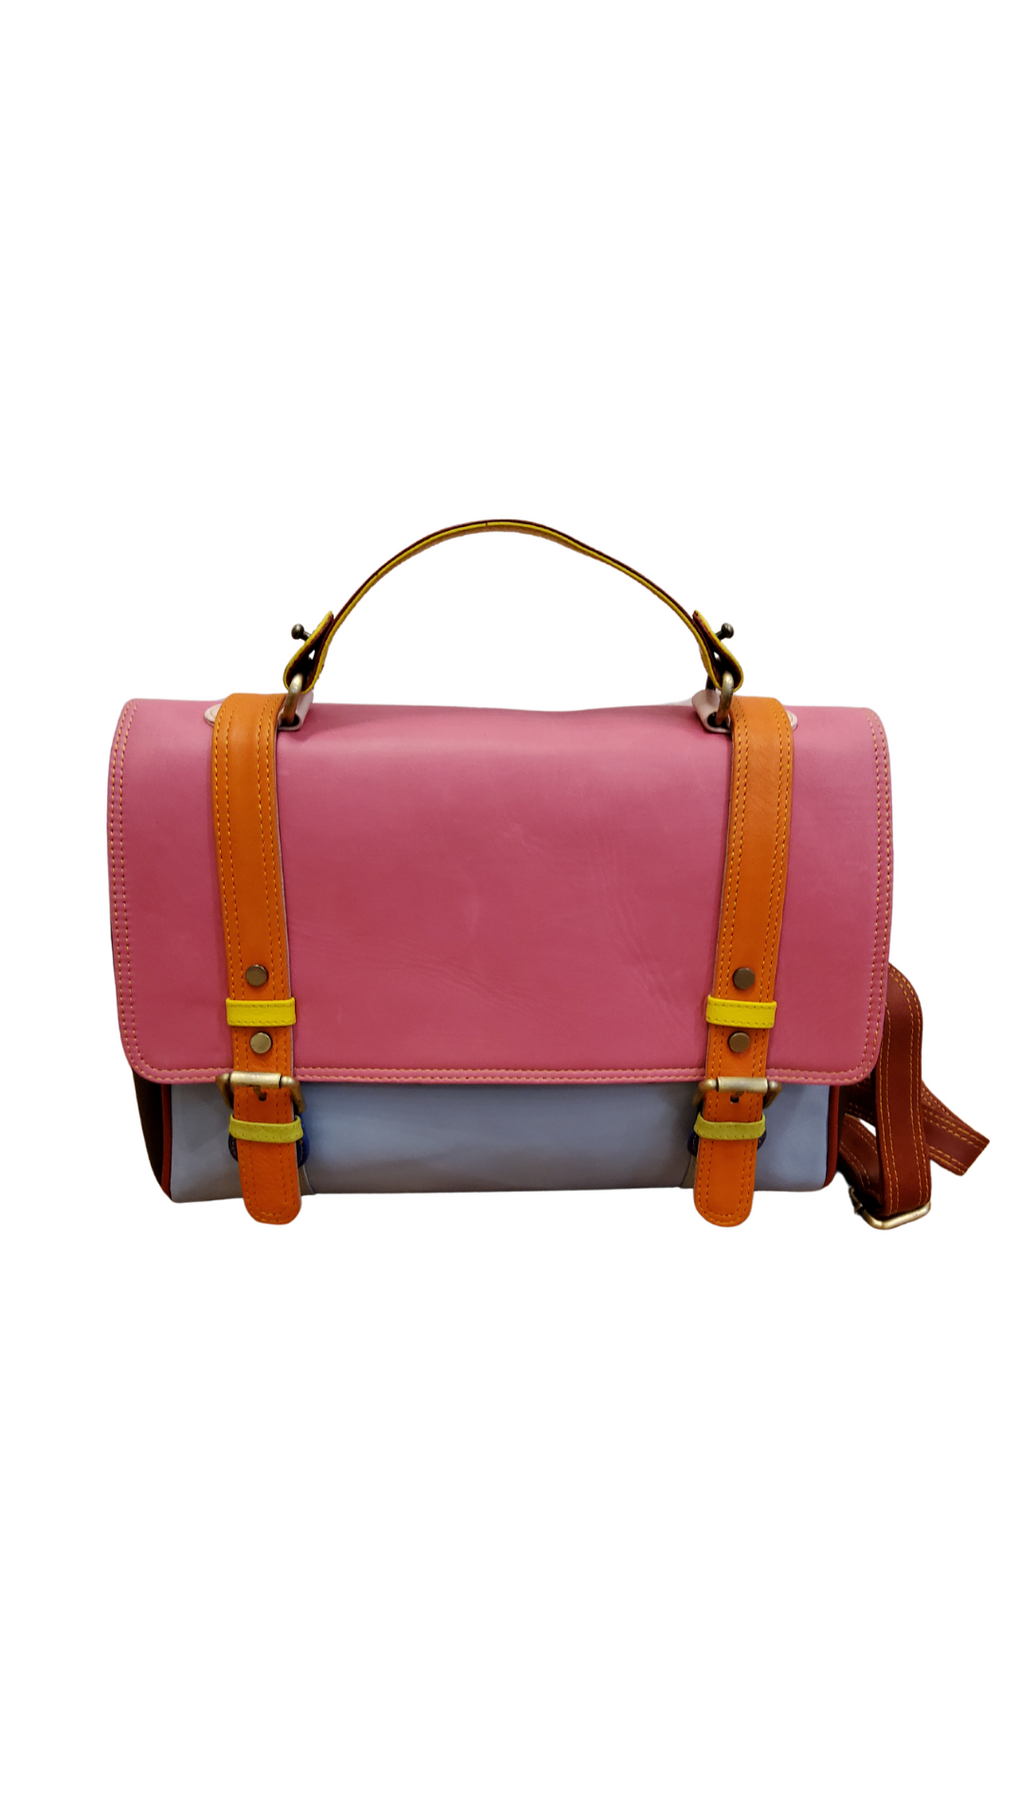 Large pastel leather satchel